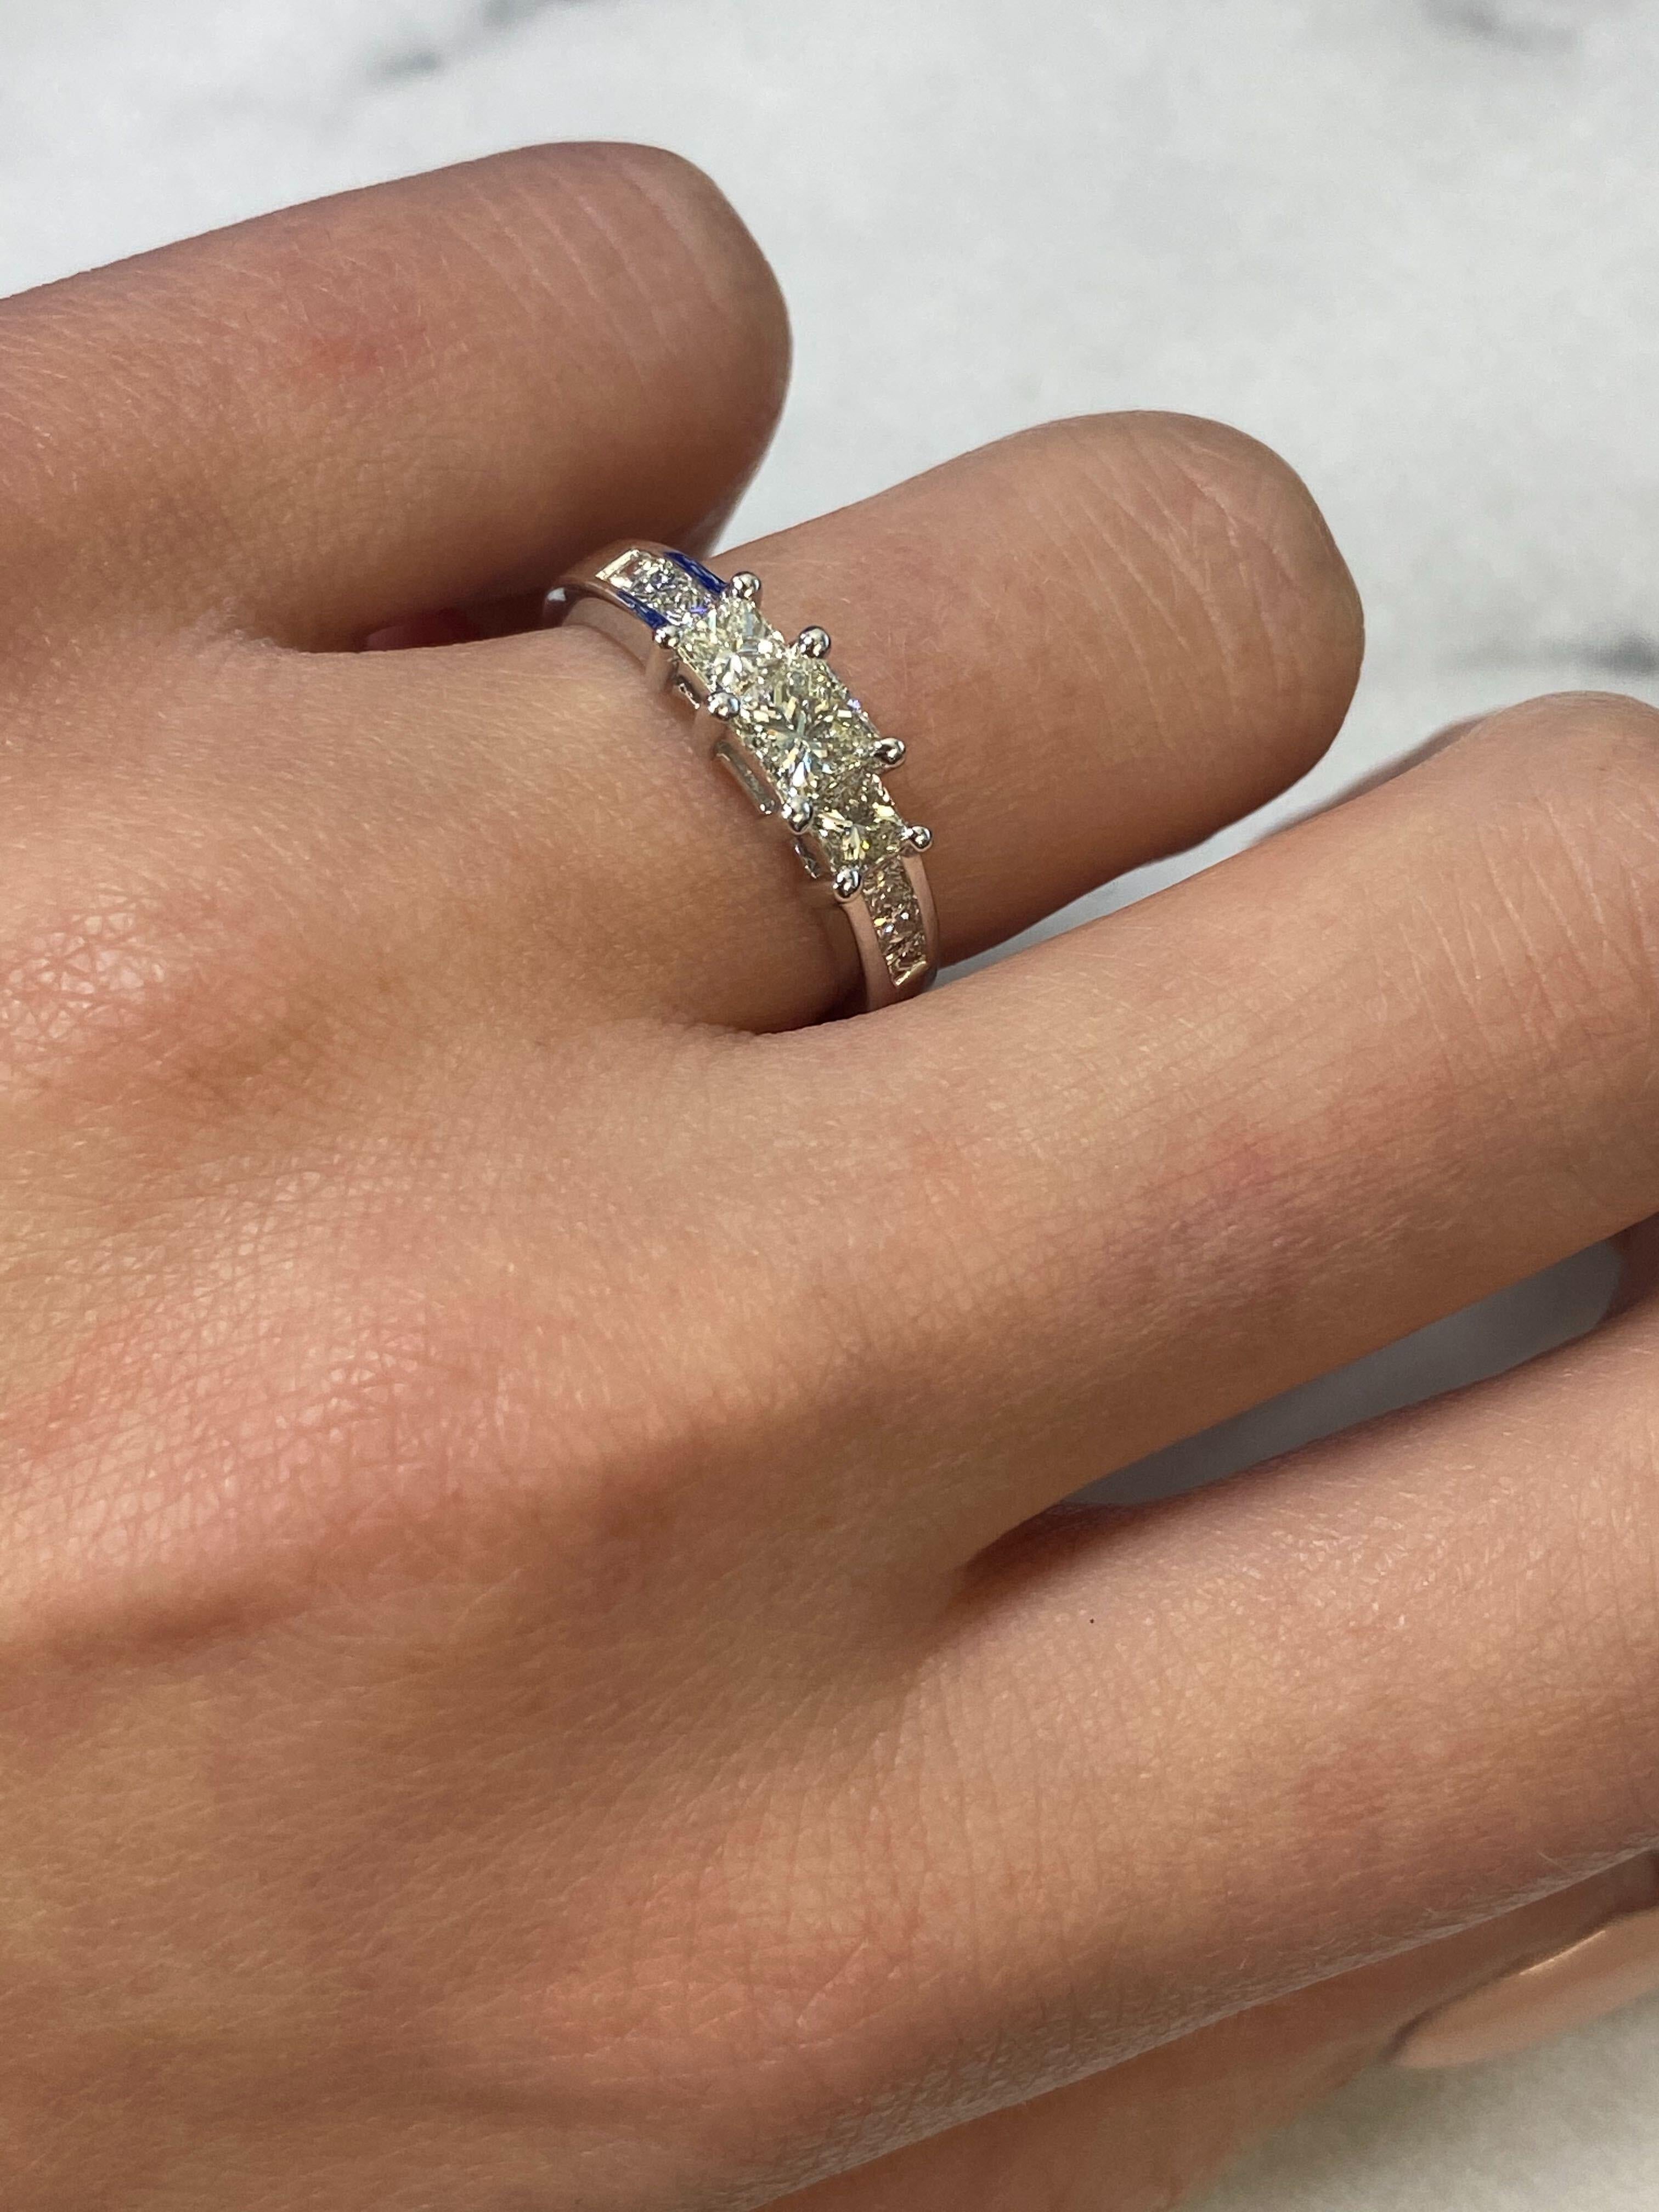 Rachel Koen 14 Karat Gold Three-Stone Princess Cut Engagement Ring 1.46 Carat For Sale 1